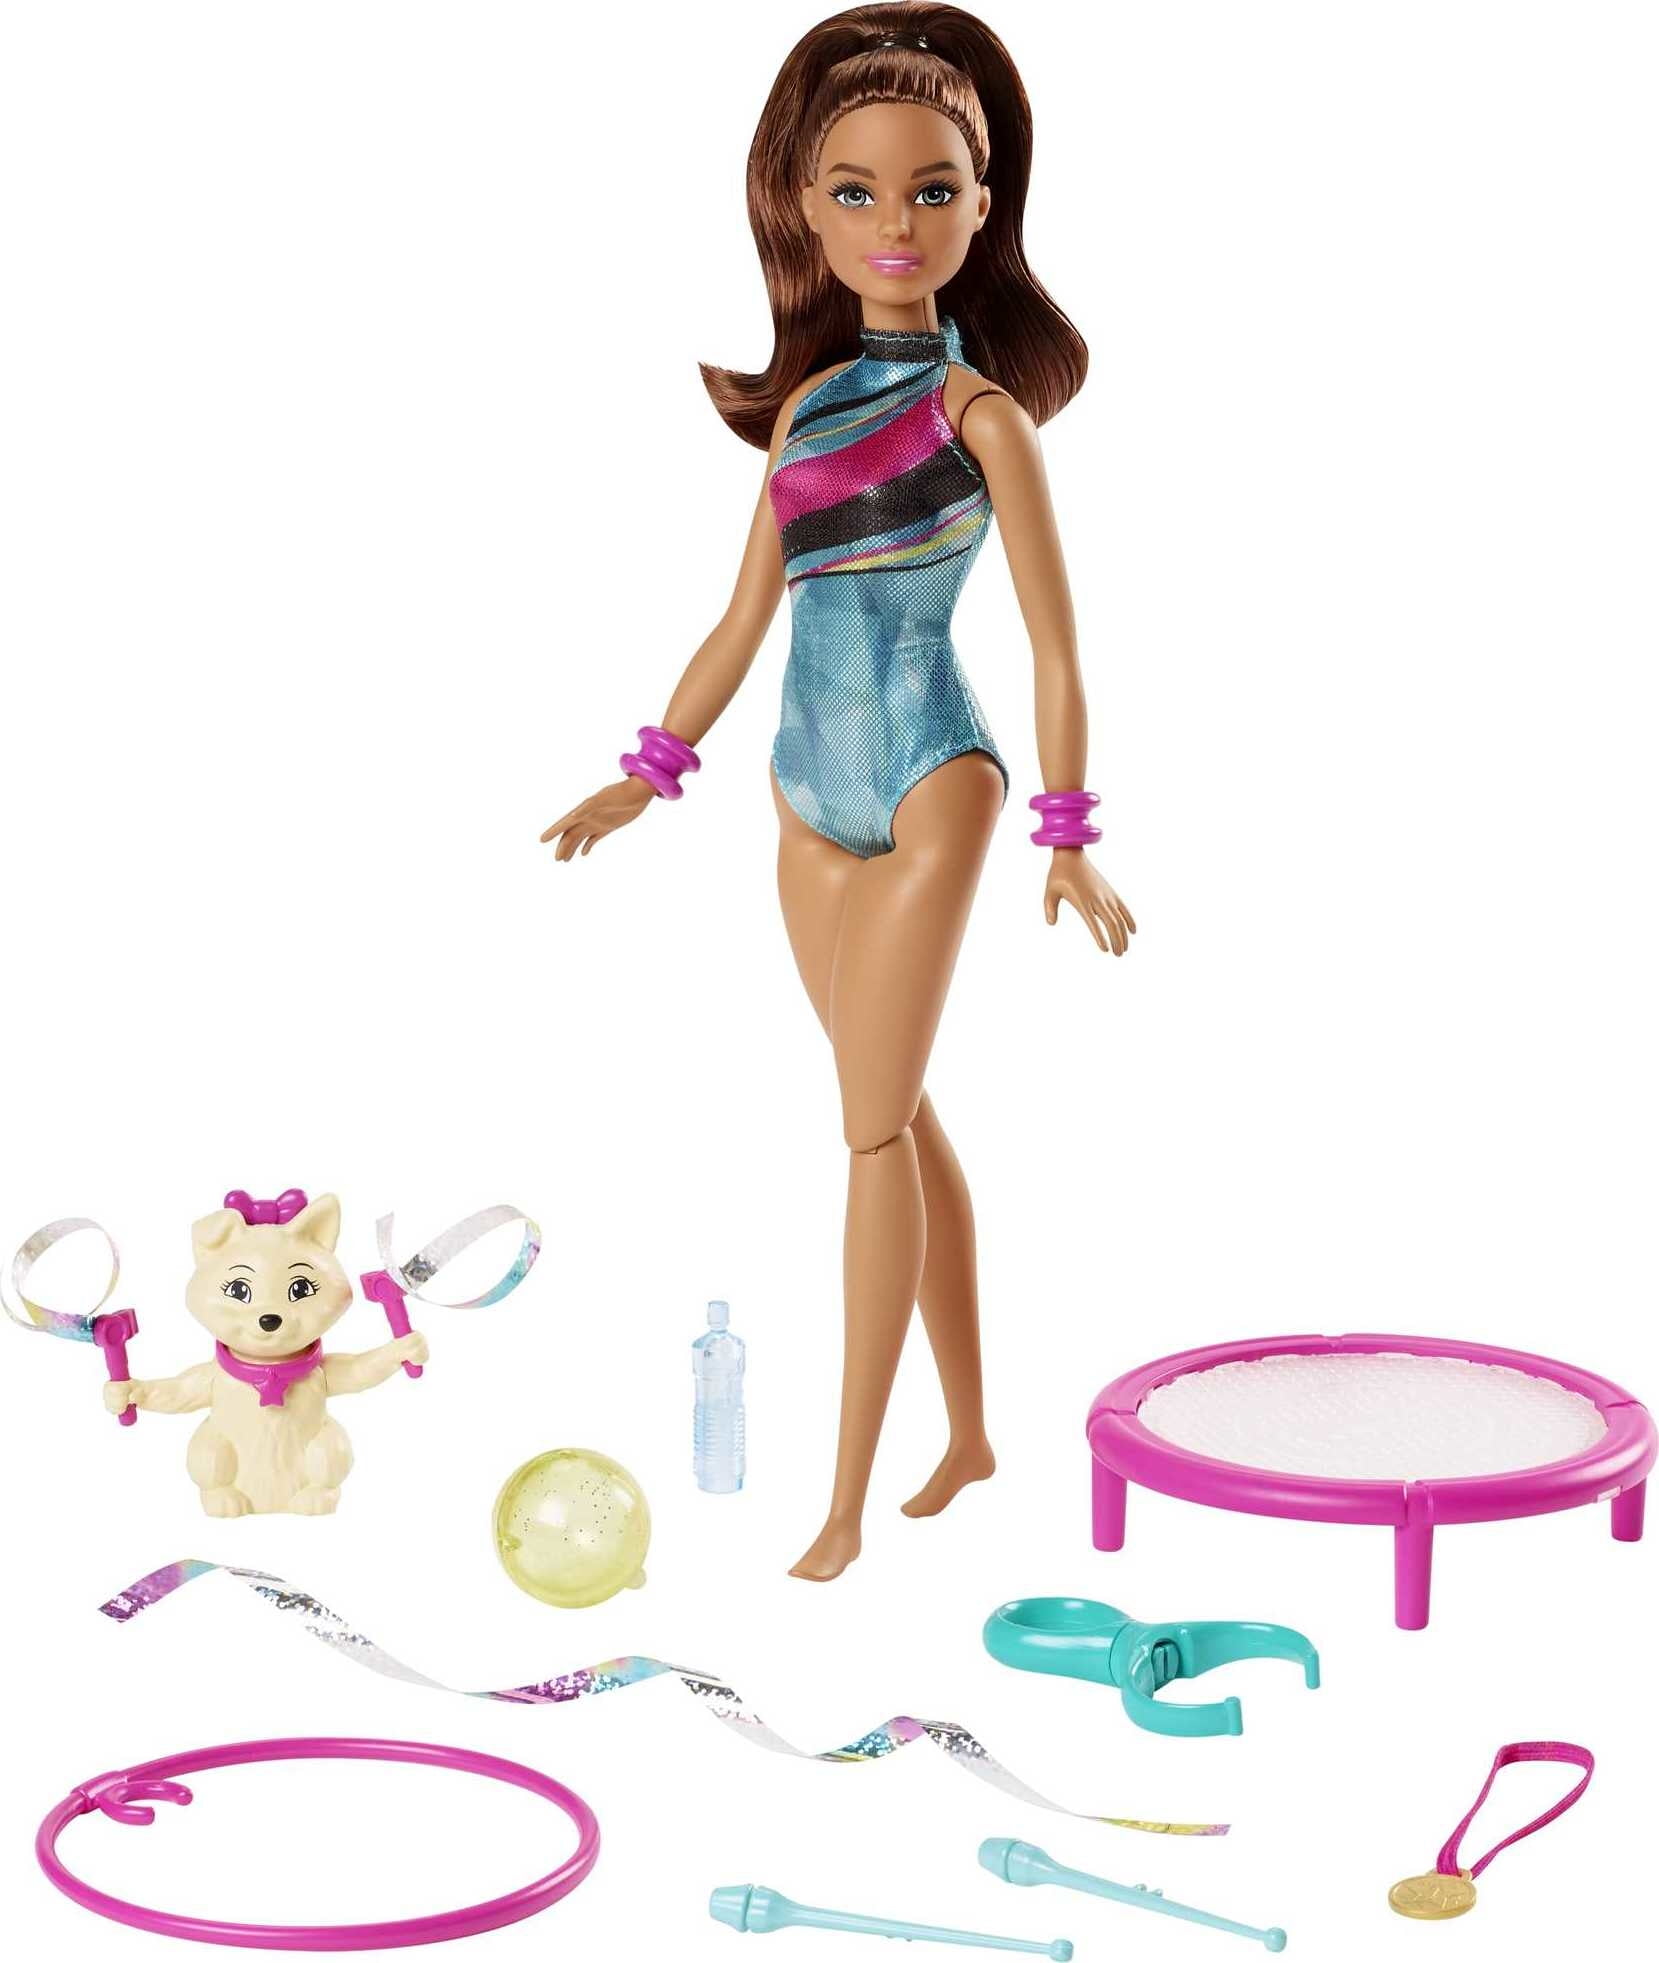 Barbie Dreamhouse Adventures Spin 'n Gymnast Doll, 11.5-inch in Leotard, with - Walmart.com